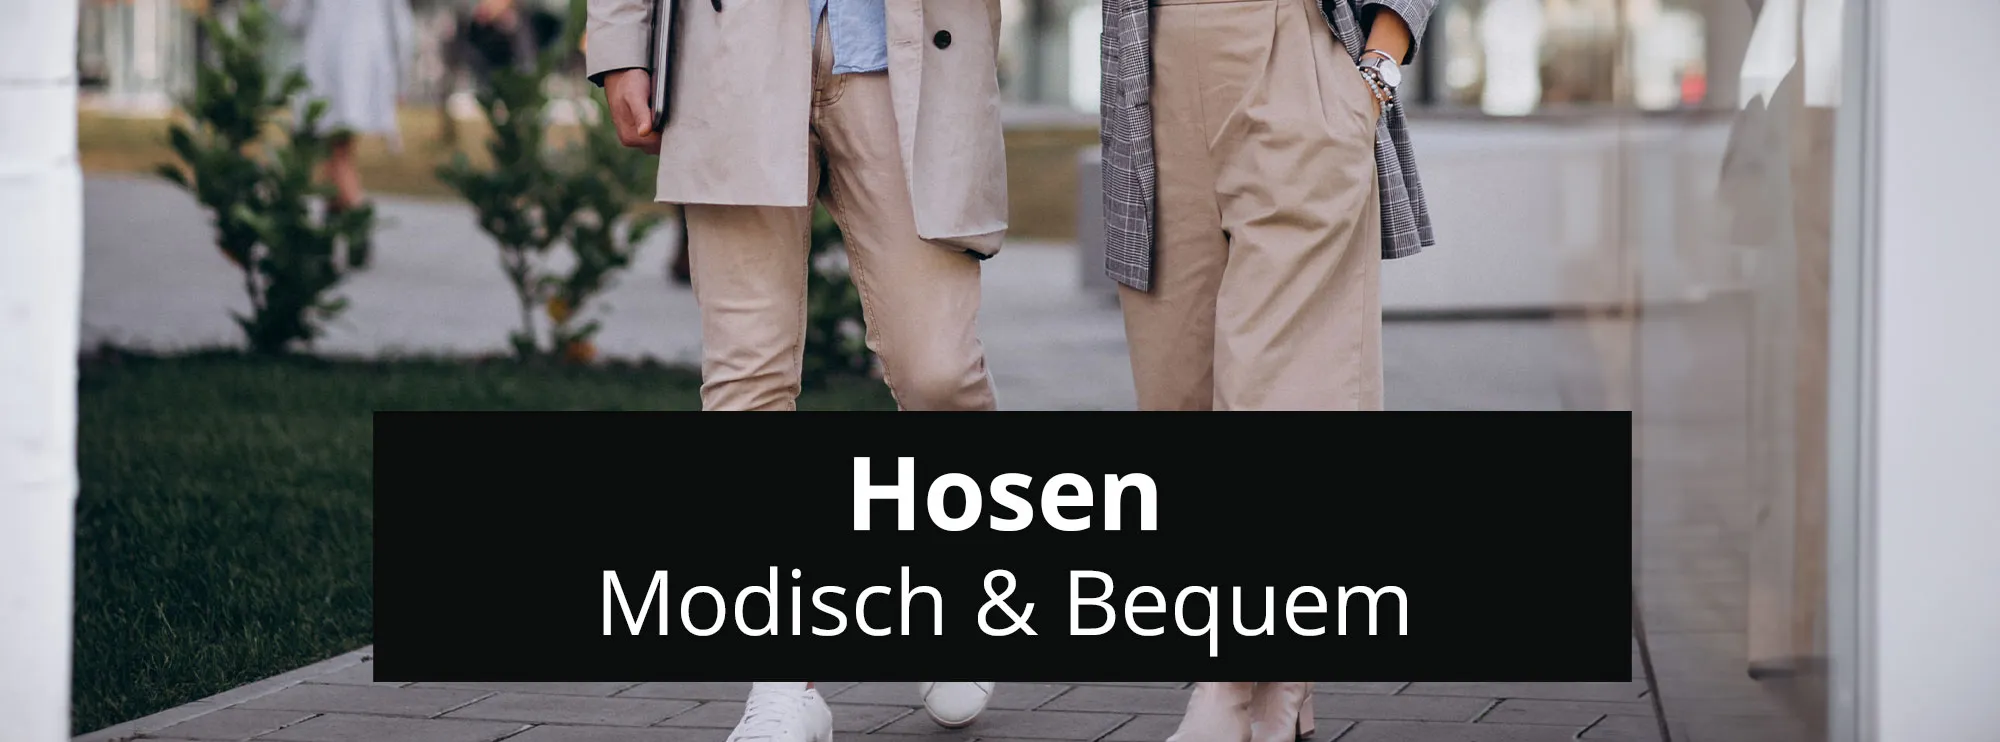 Hosen header rosier online shop